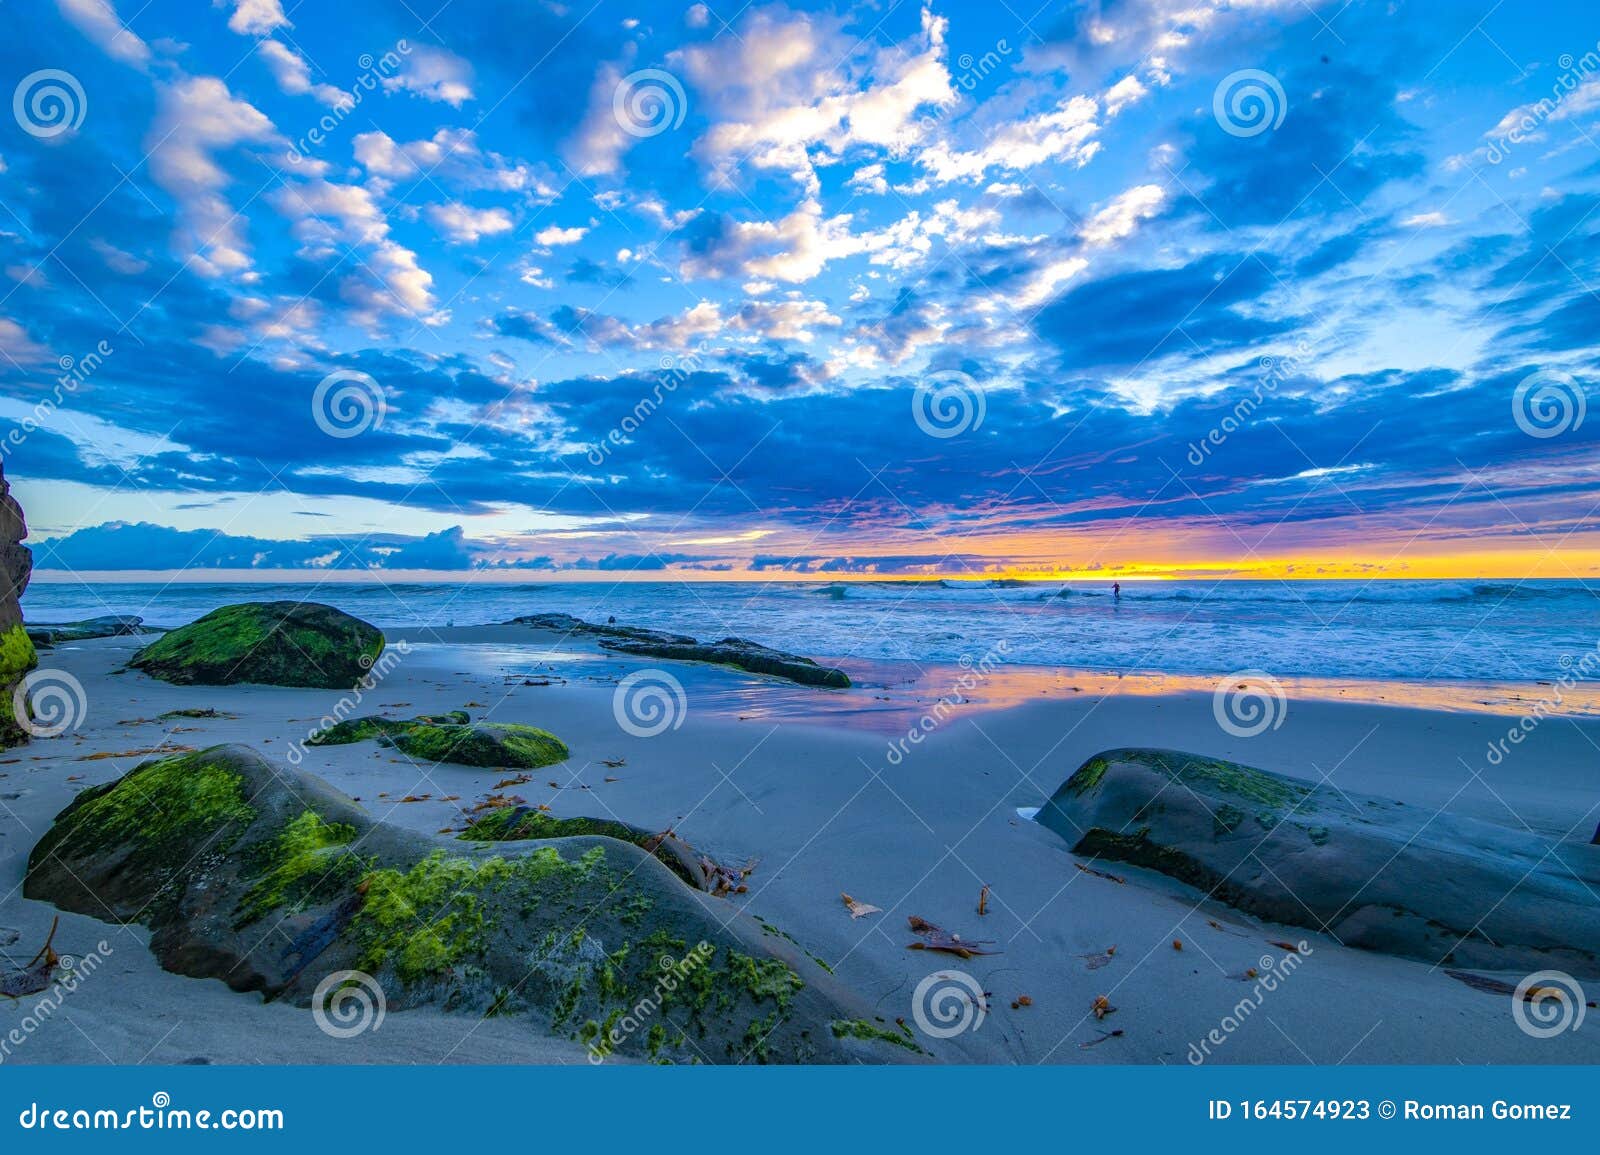 Windansea Beach la jolla stock image. Image of community - 164574923